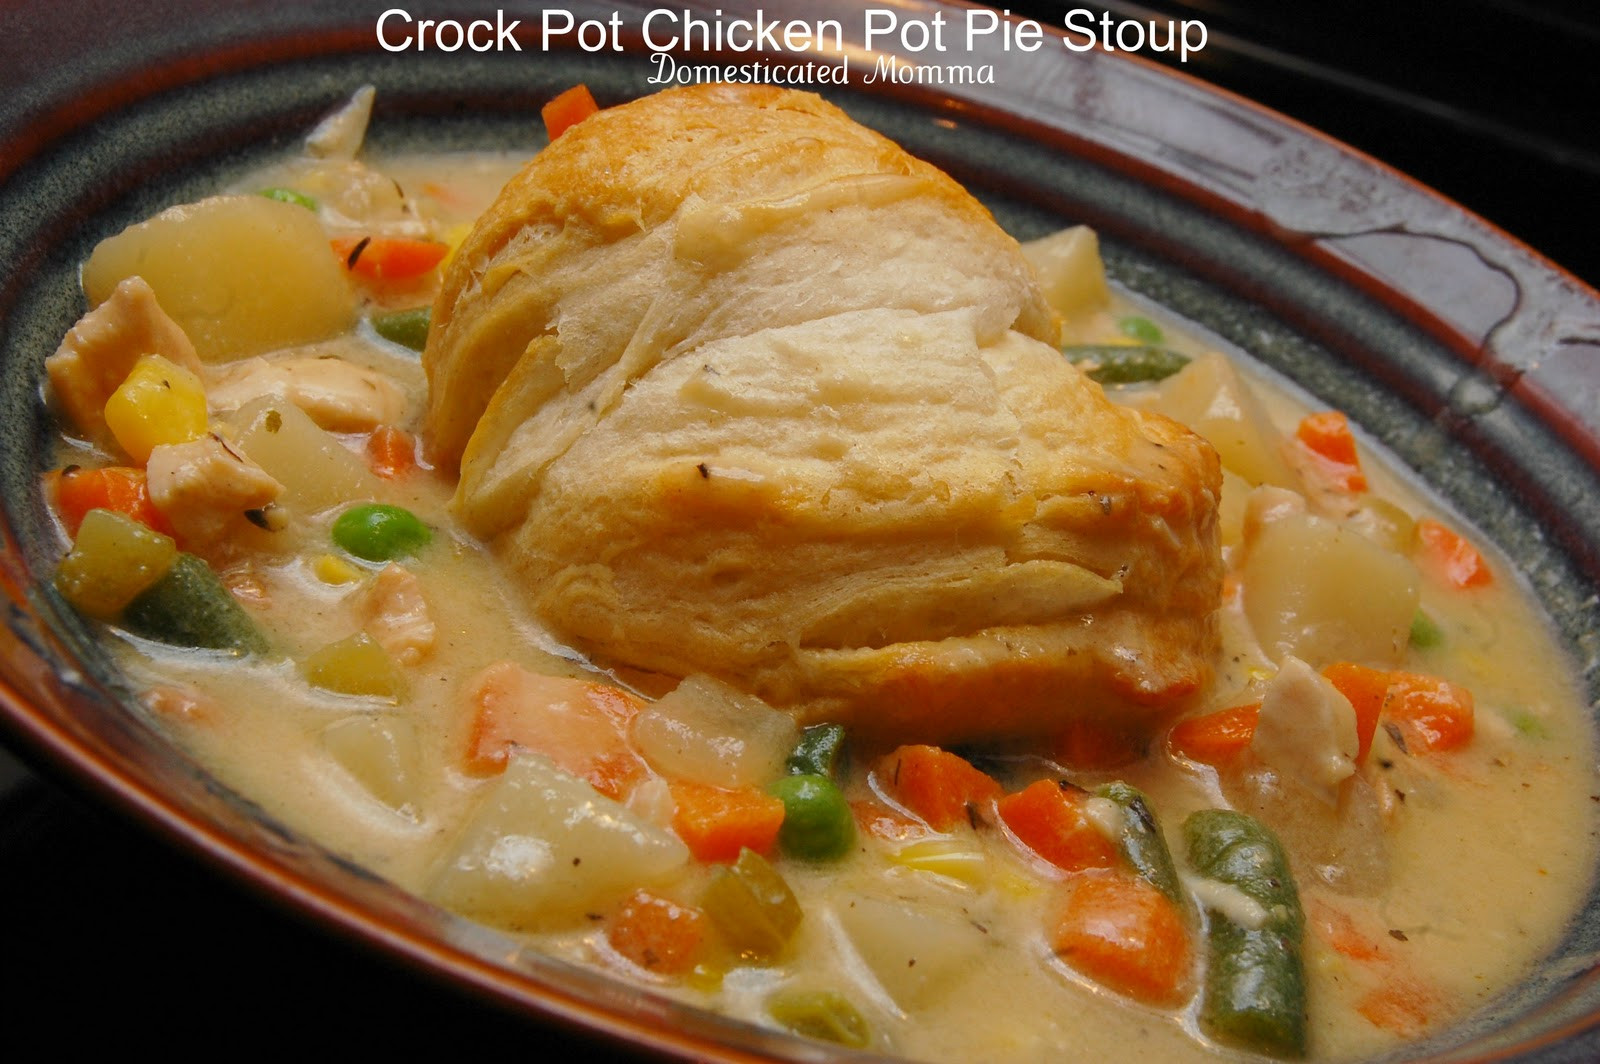 Chicken Pot Pie Soup Crock Pot
 Foo Friday Crock Pot Chicken Pot Pie Stoup